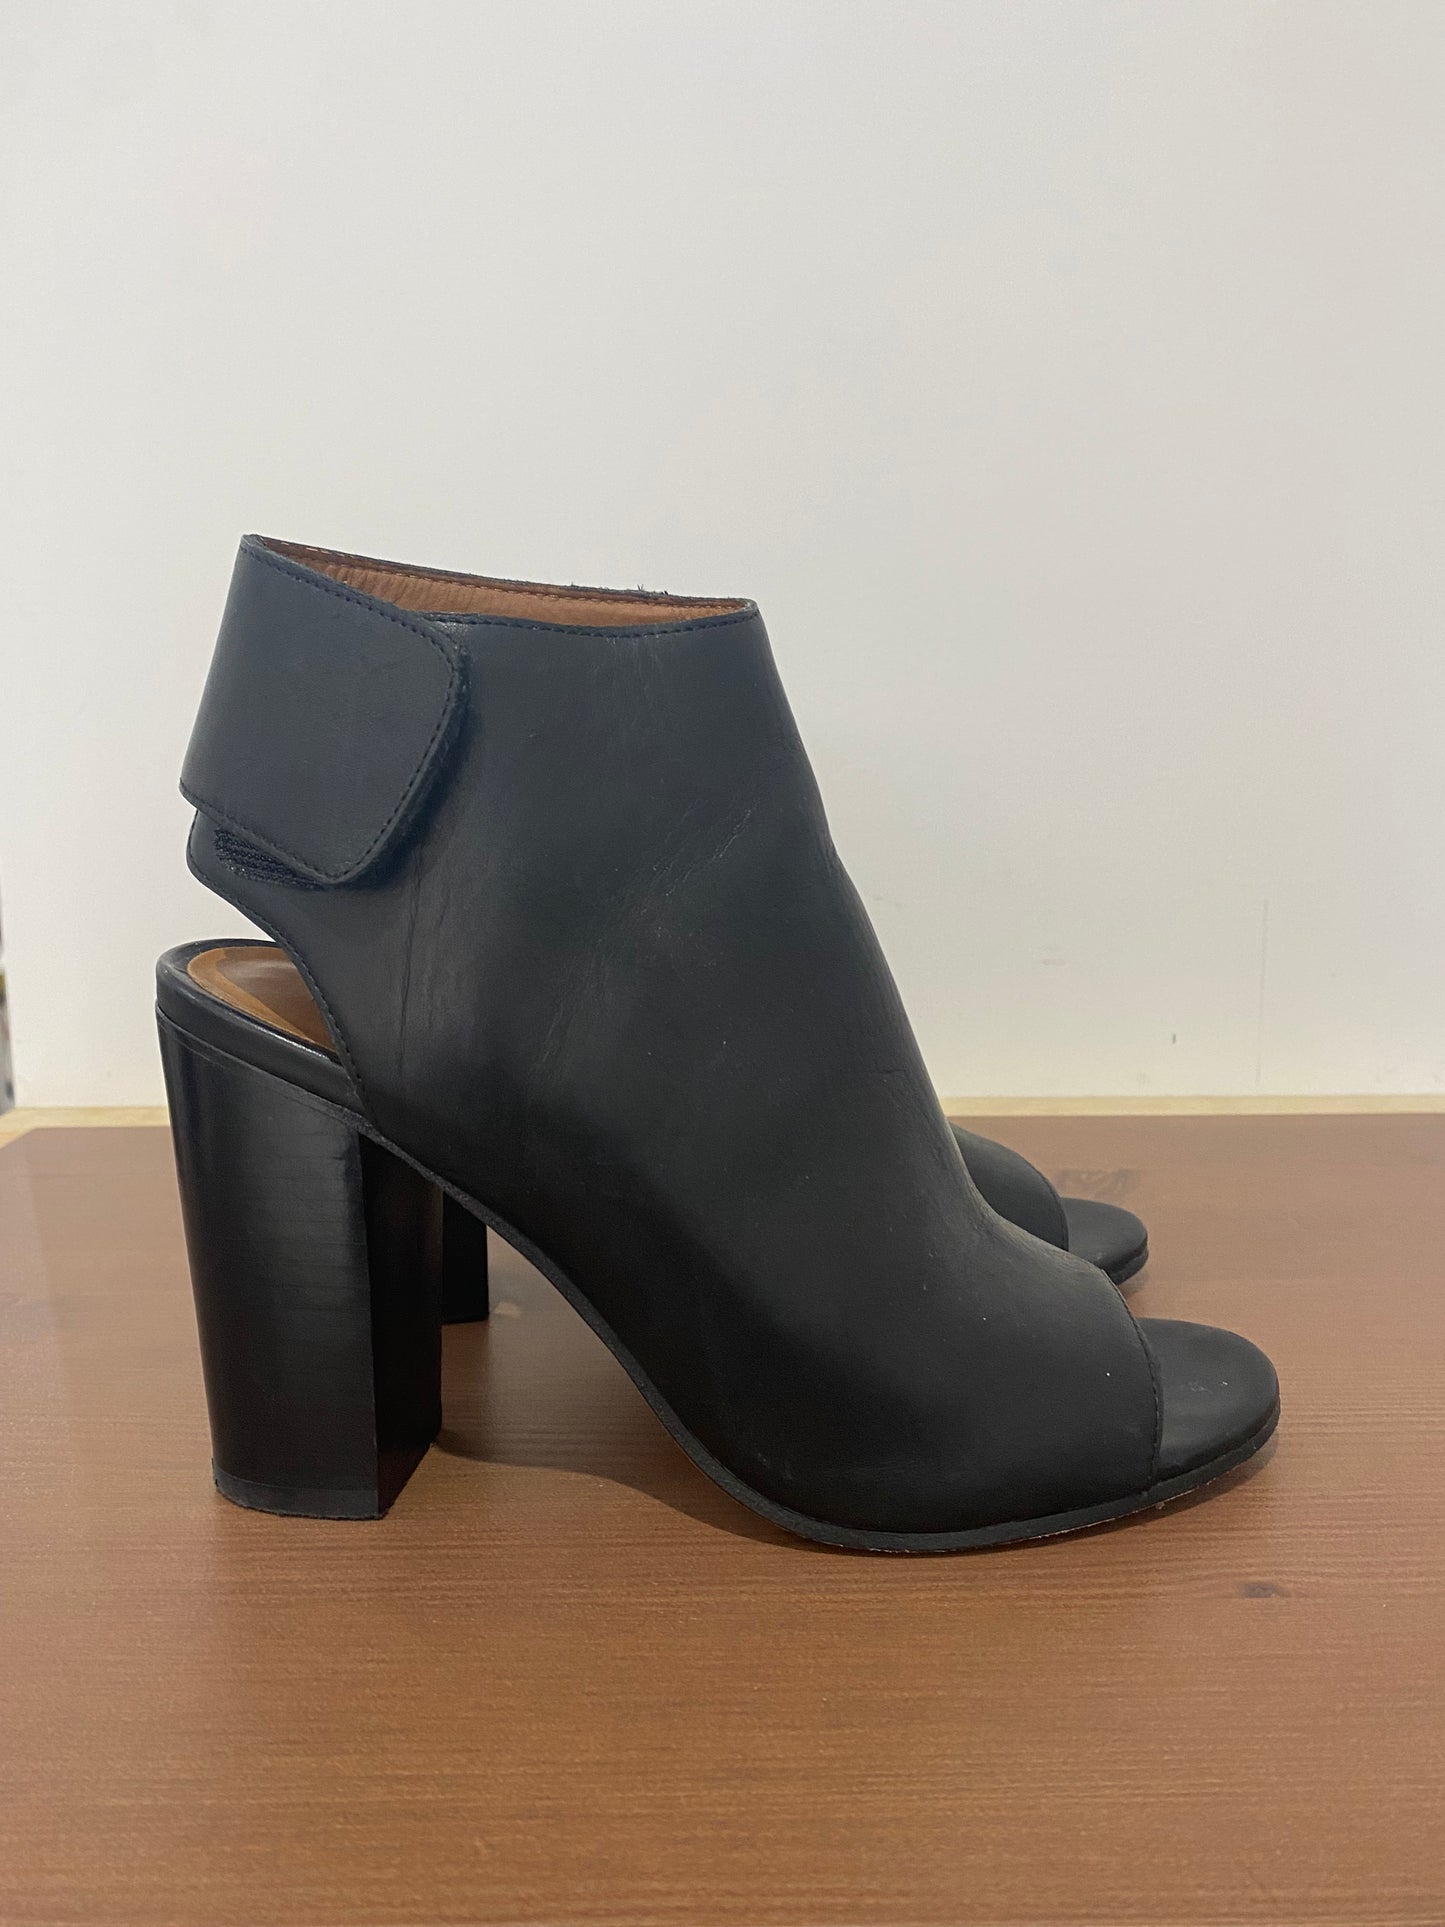 Whistles Black Leather Peep Toe Shoe Boots Size 4